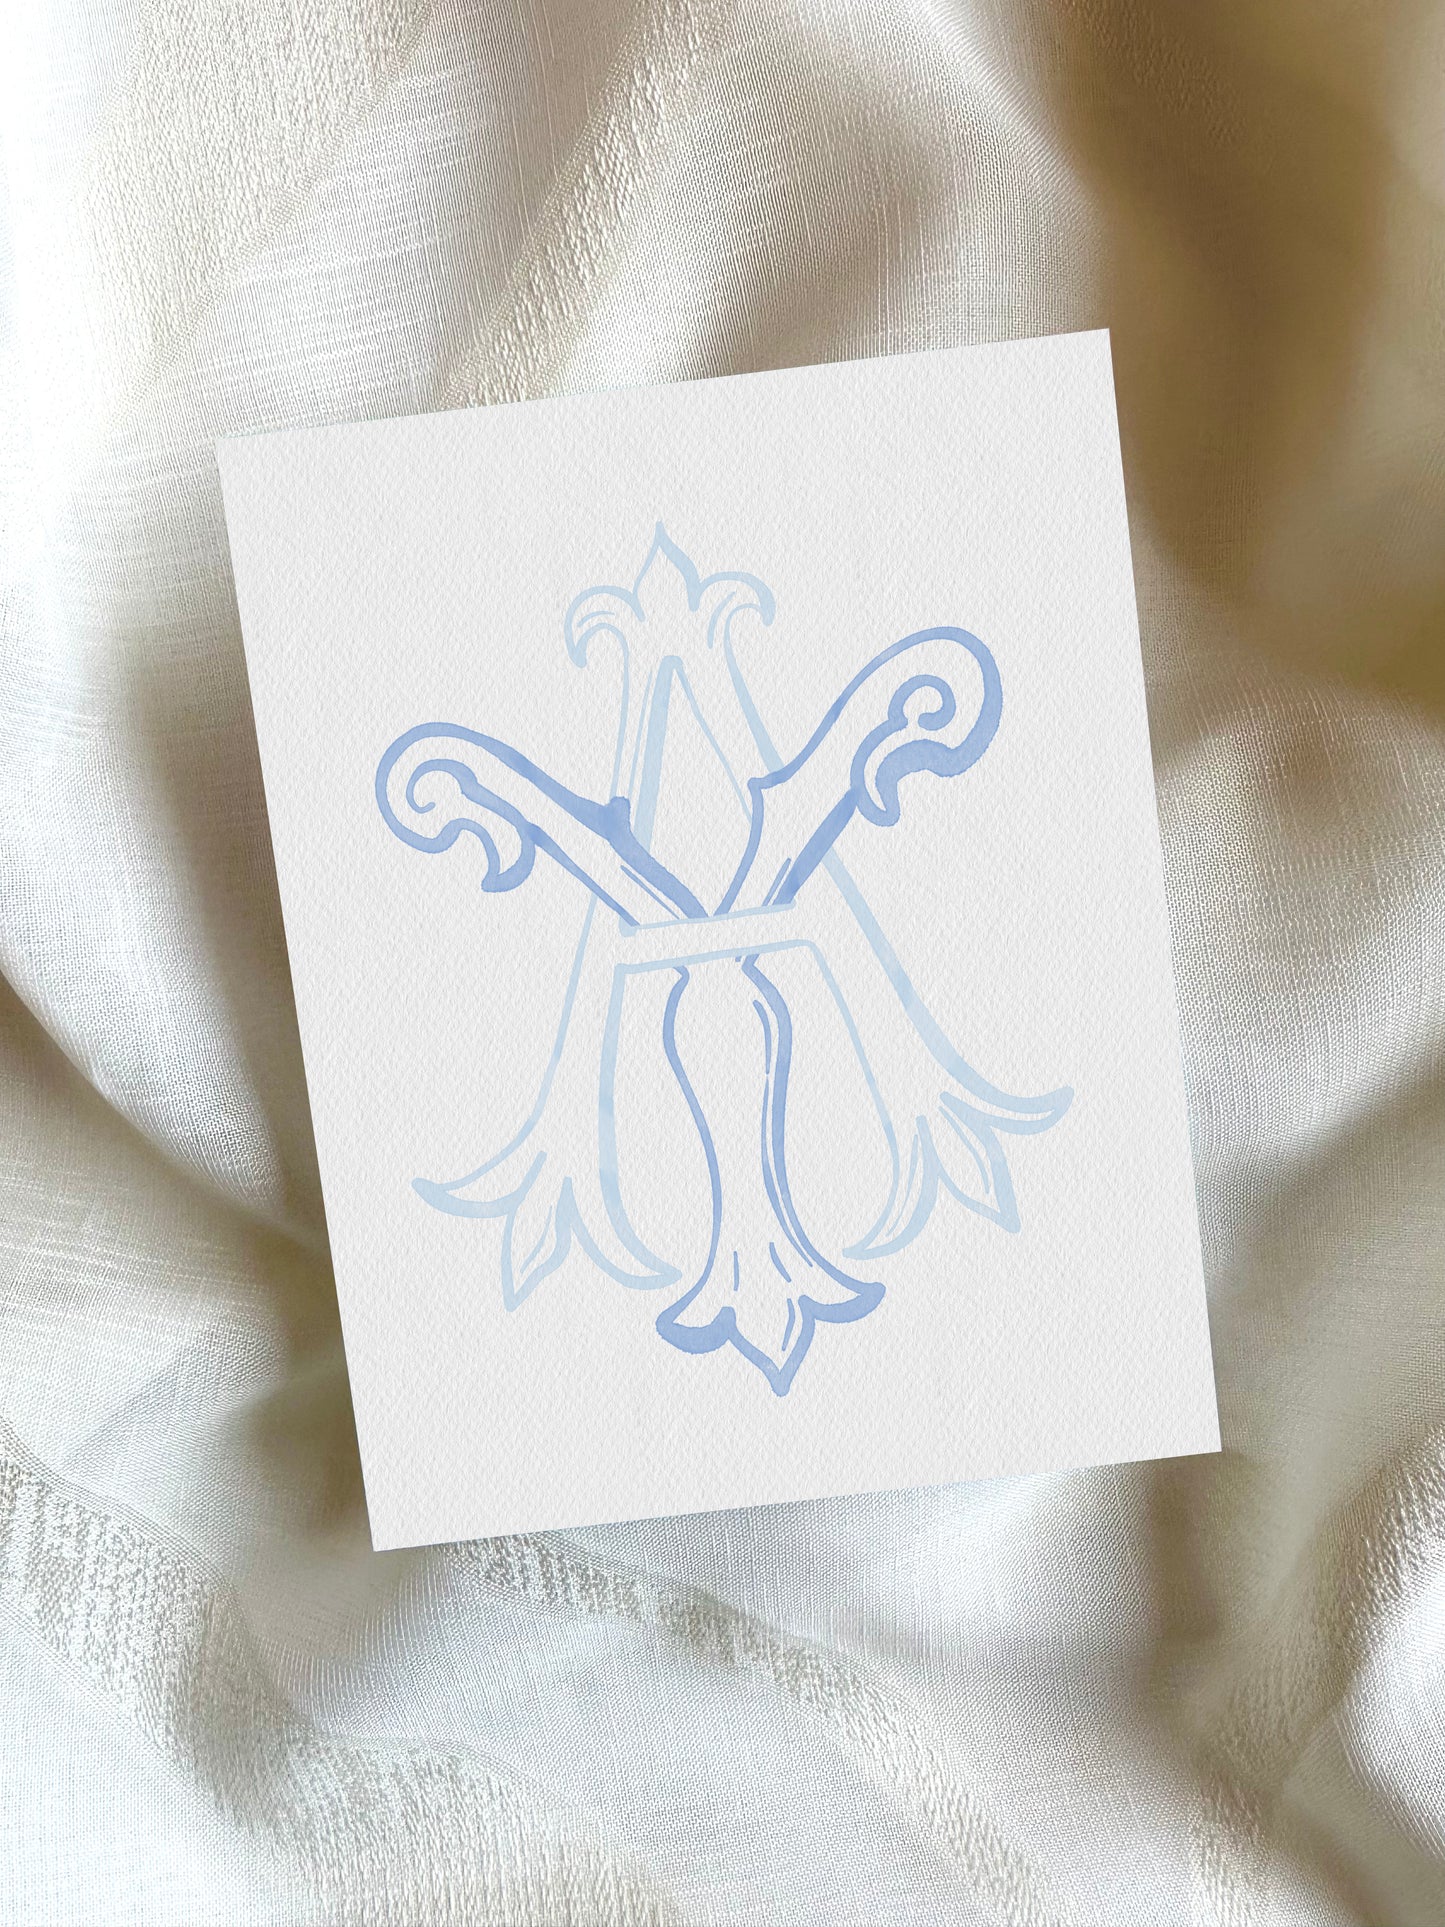 2 Letter Monogram with Letters AY YA | Digital Download - Wedding Monogram SVG, Personal Logo, Wedding Logo for Wedding Invitations